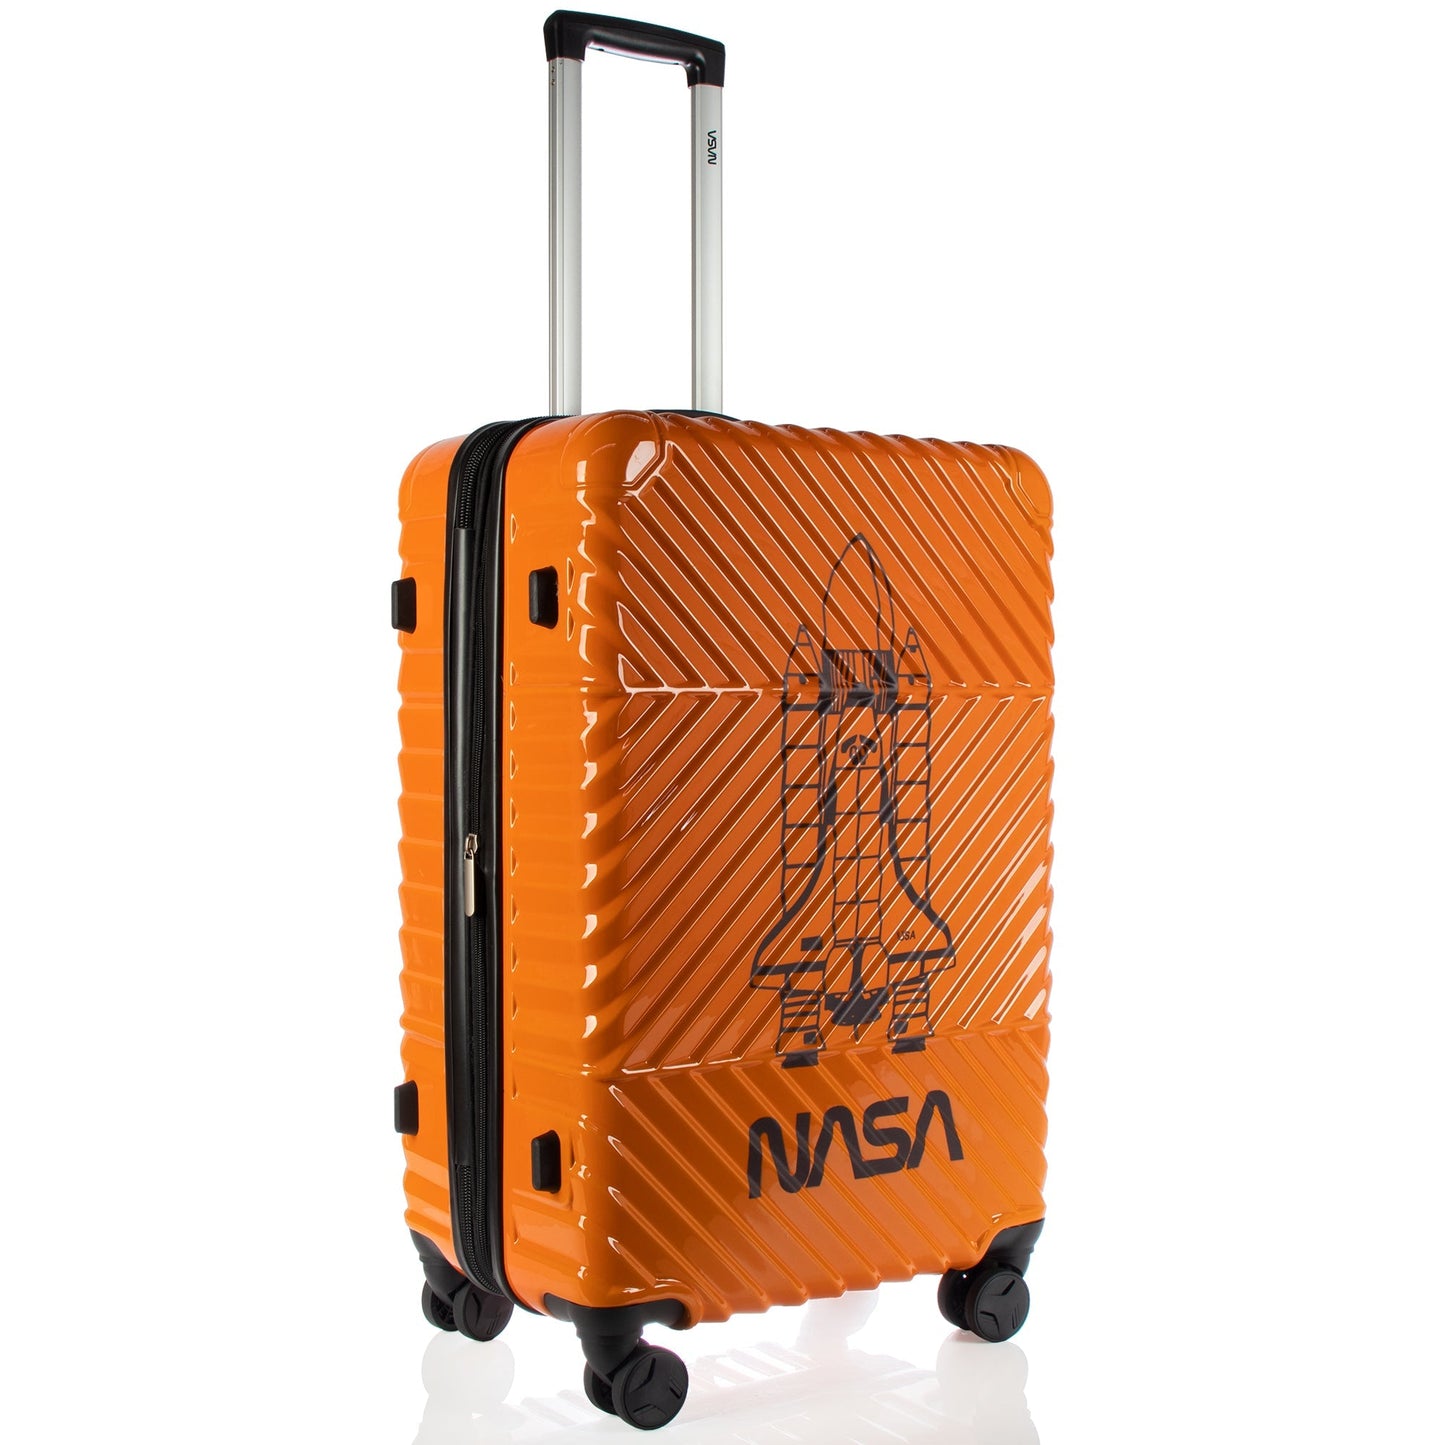 Space Shuttle Collection Orange Luggage 3 Piece Set (21/25/29") Suitcase Lock Spinner Hardshell